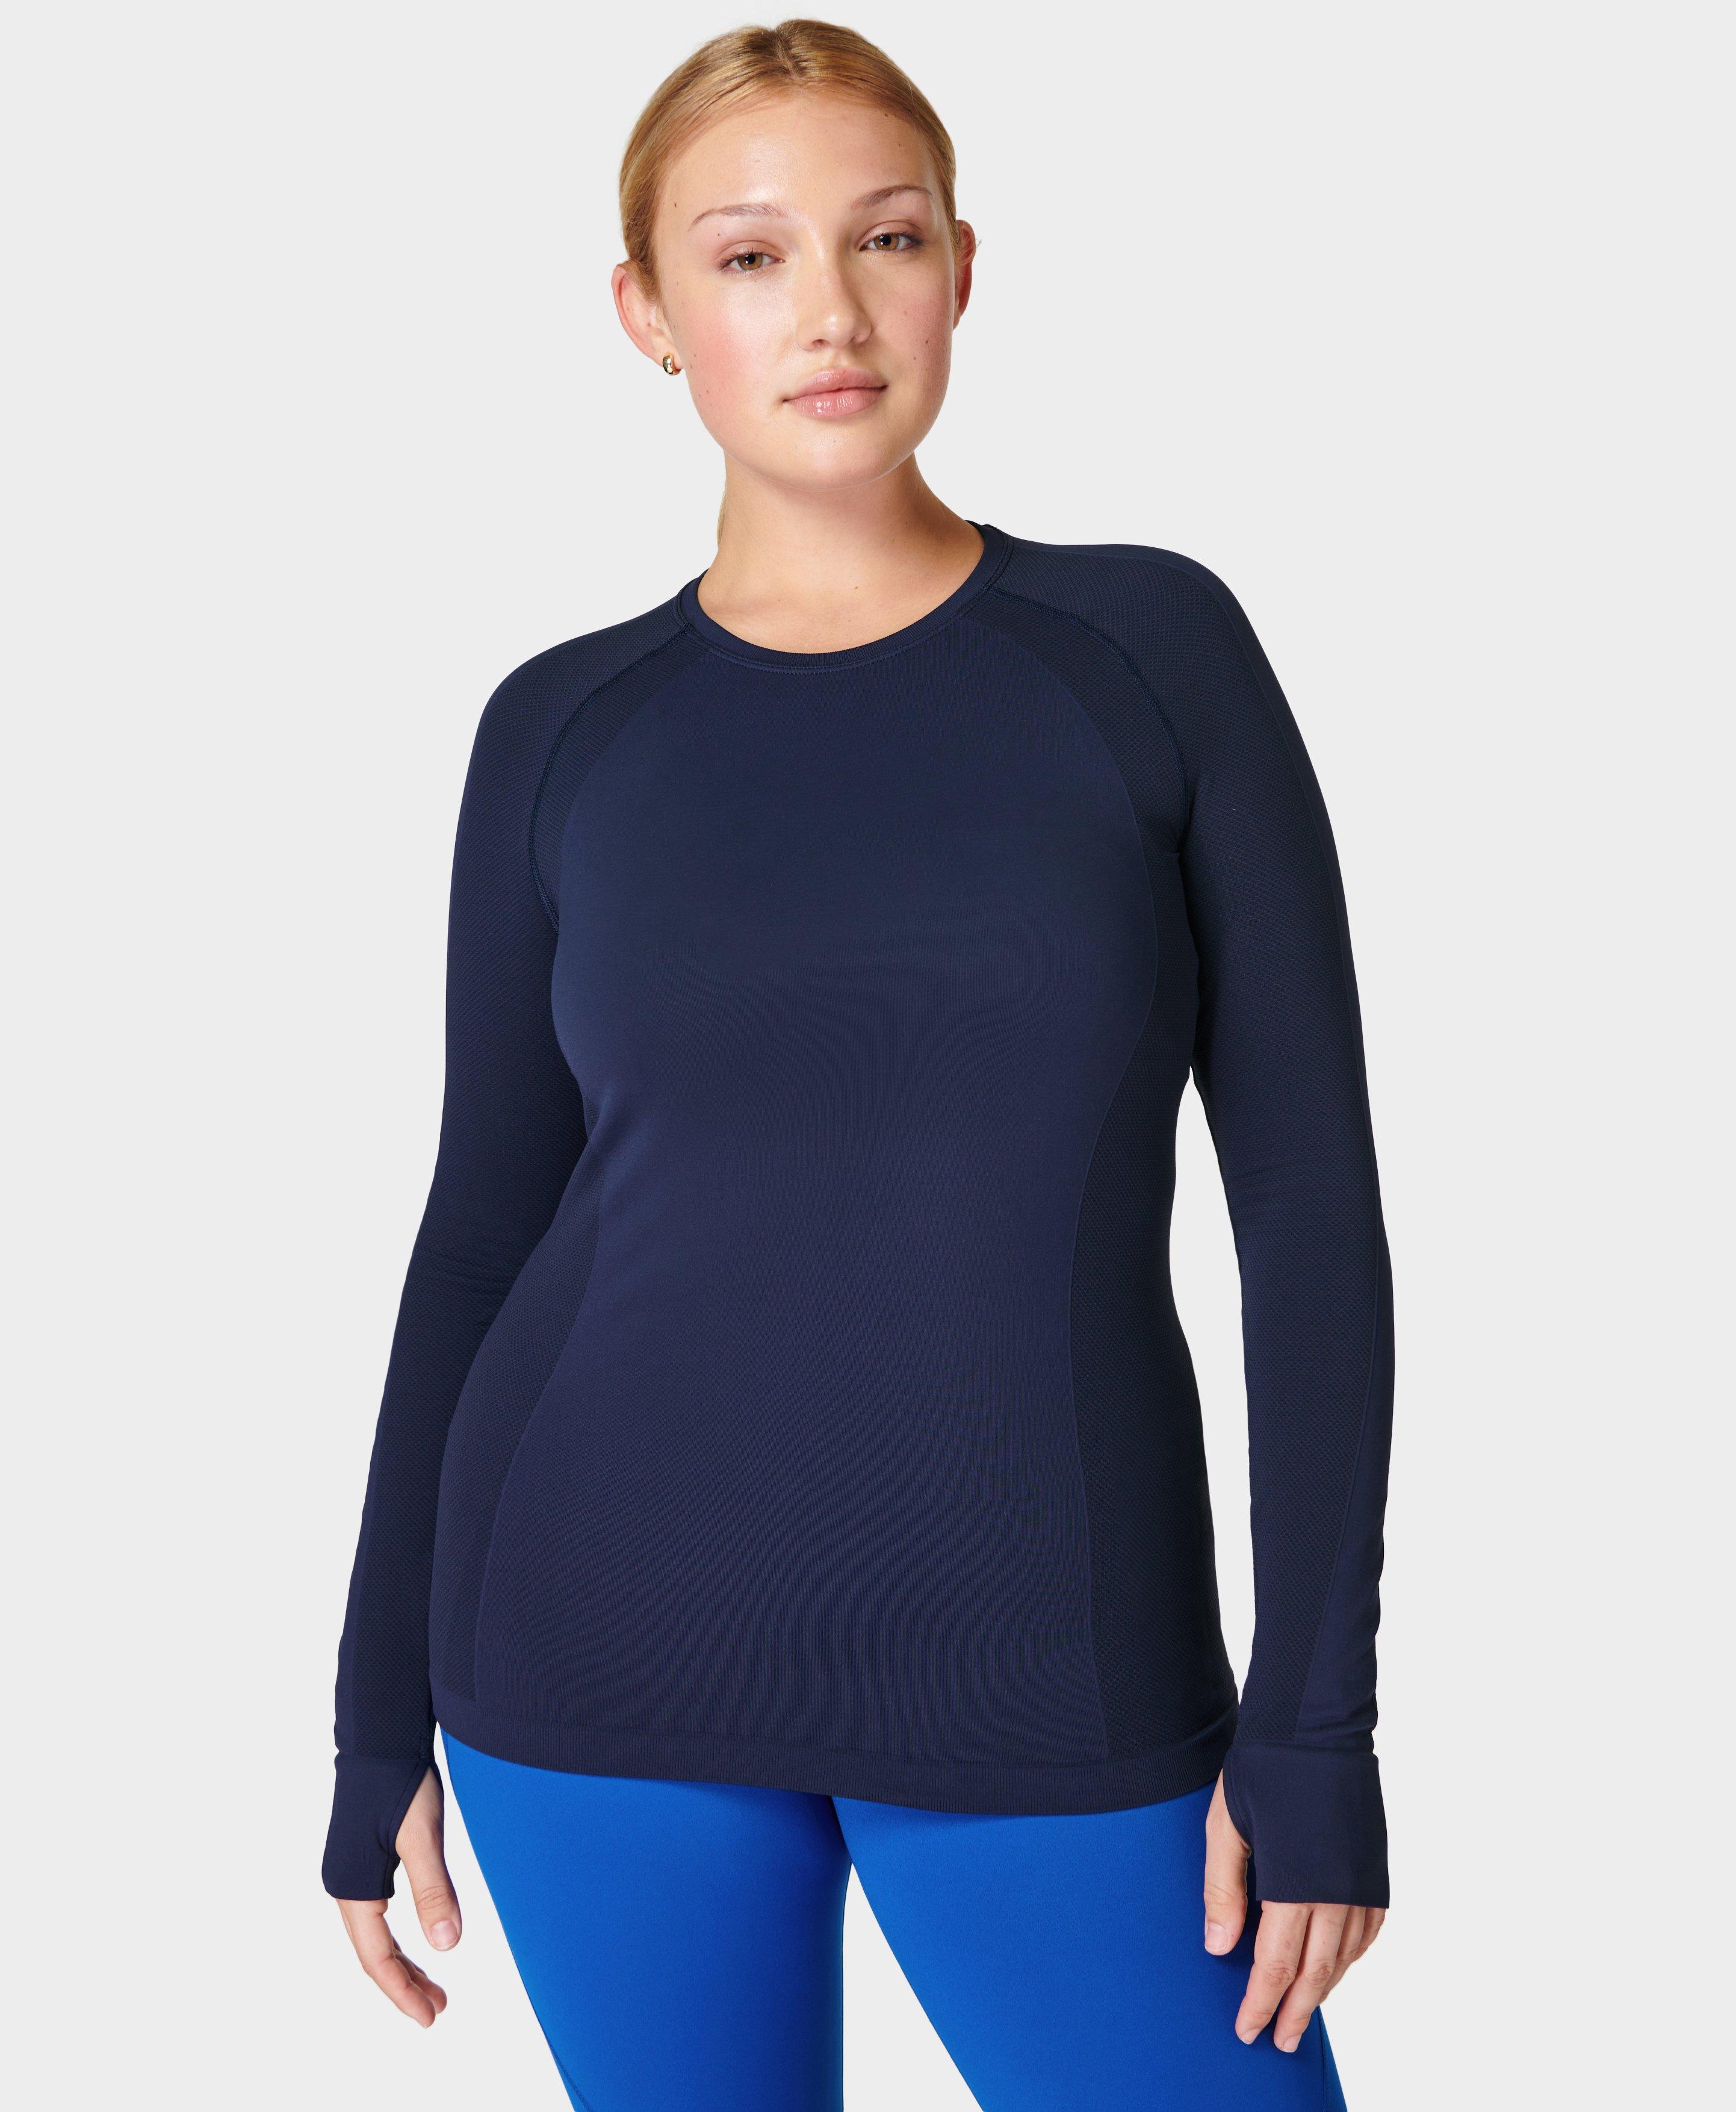 Women's Long Sleeve Deep V Neck Slim fit Cross Wrap Spandex Shirt,Sexy Yoga  Lightweight Stretch Exercise Athletic Shirts Sport Shirt Running Tight